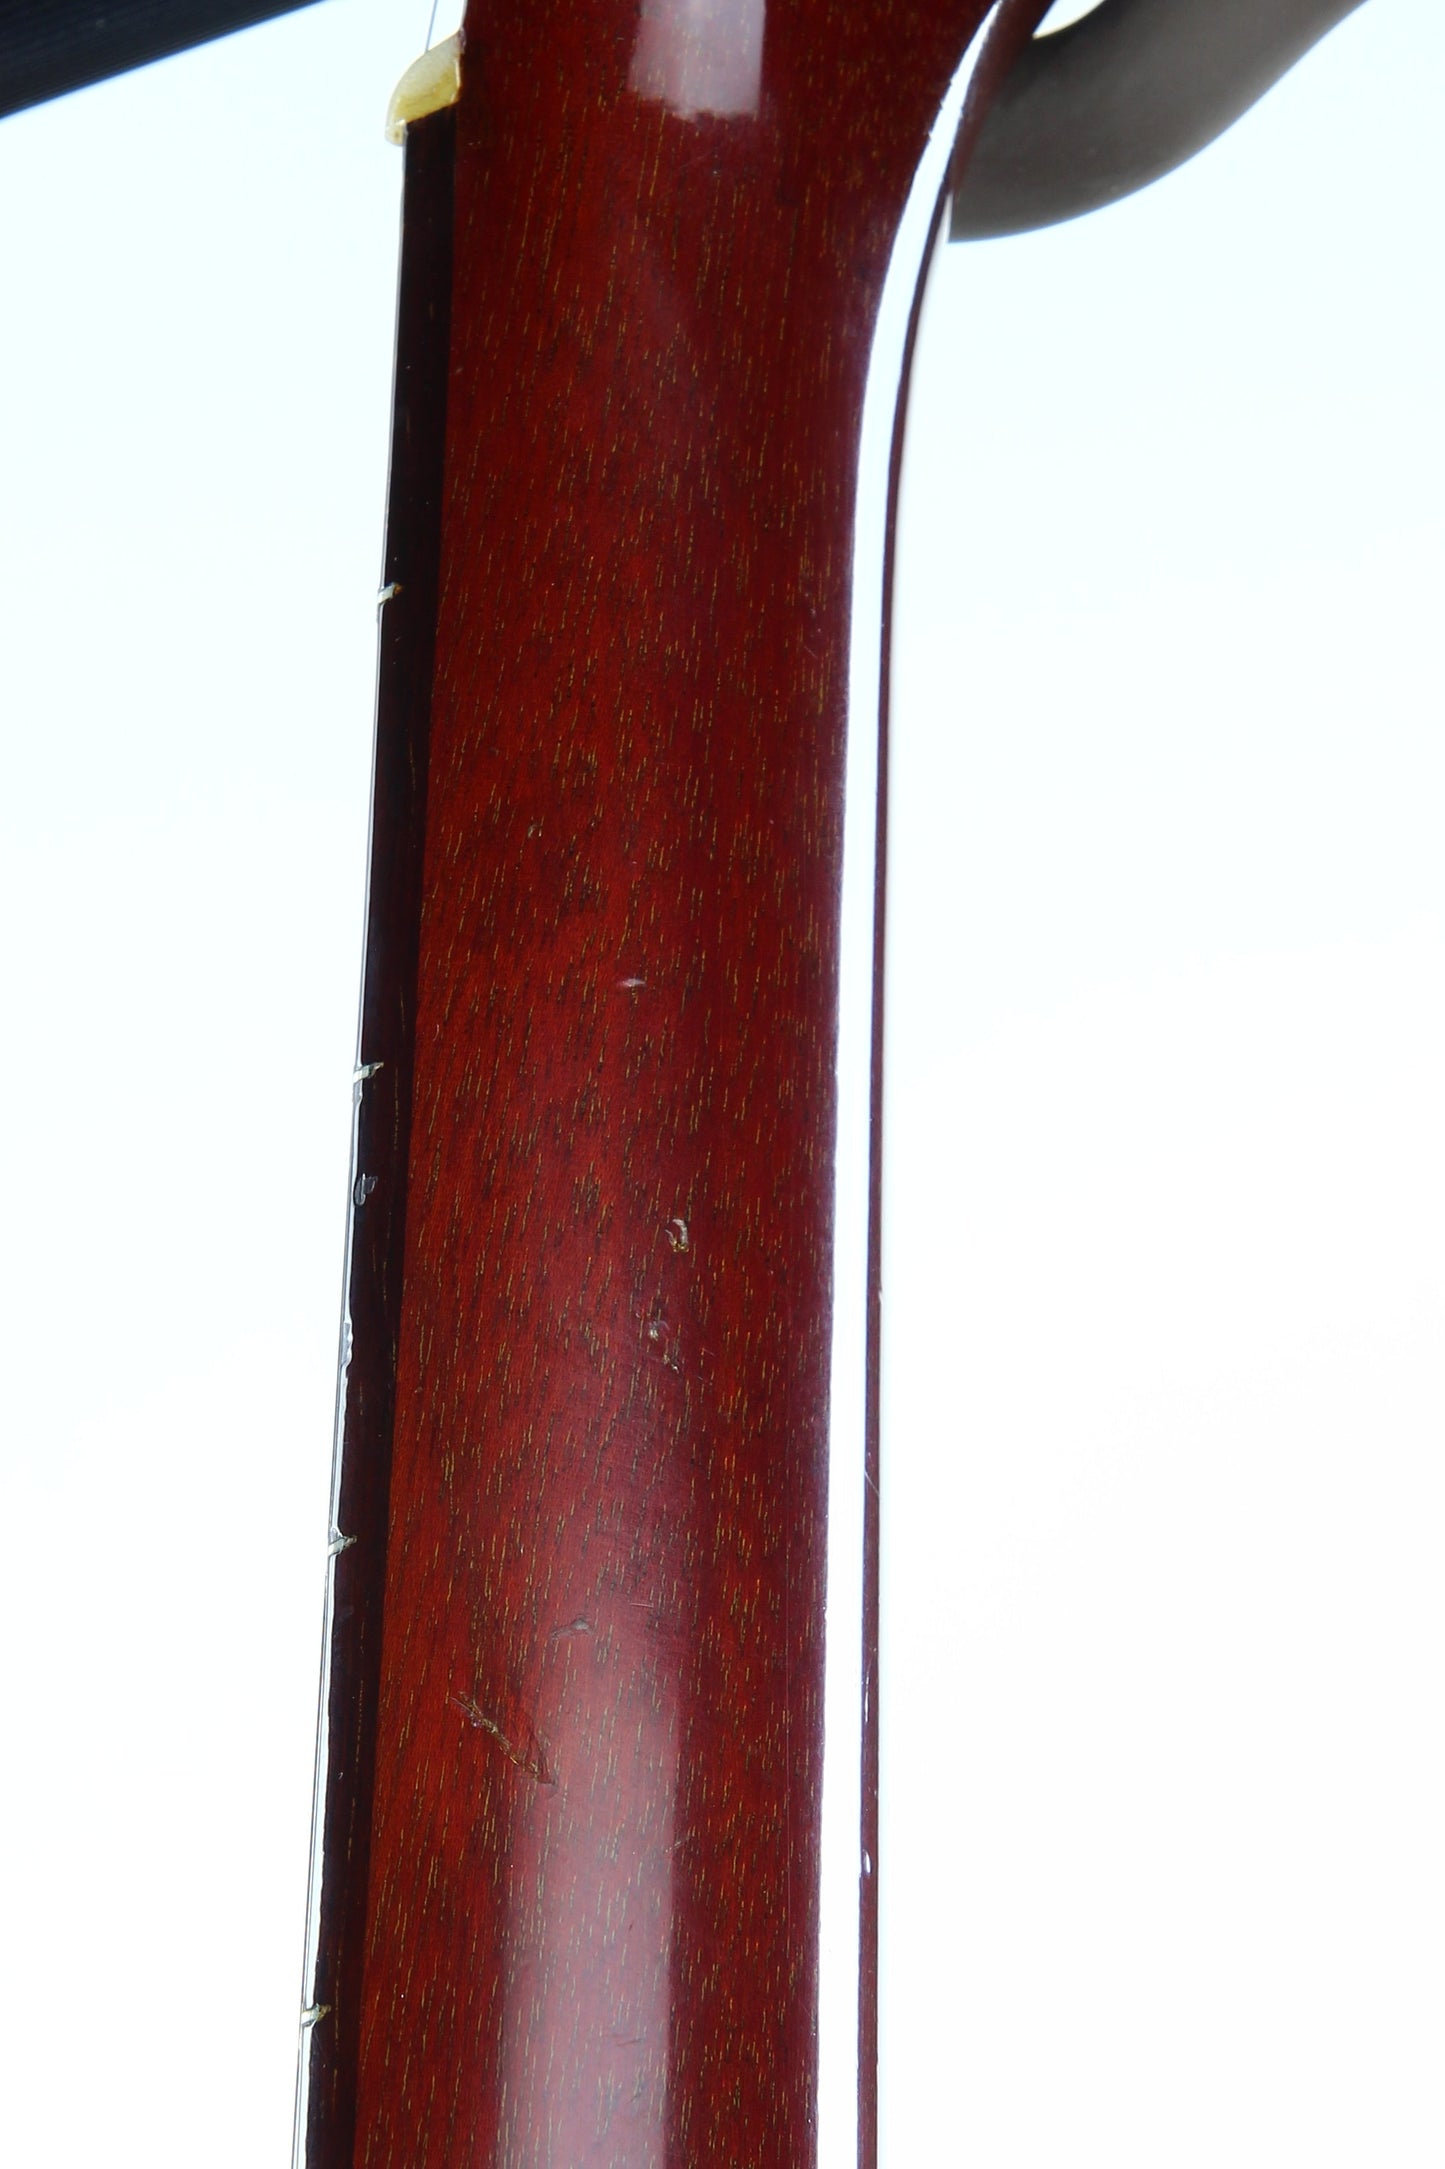 1961 Epiphone Century E422T Royal Burgundy Vintage Thinline - James Bay Gibson ES-125T Cherry